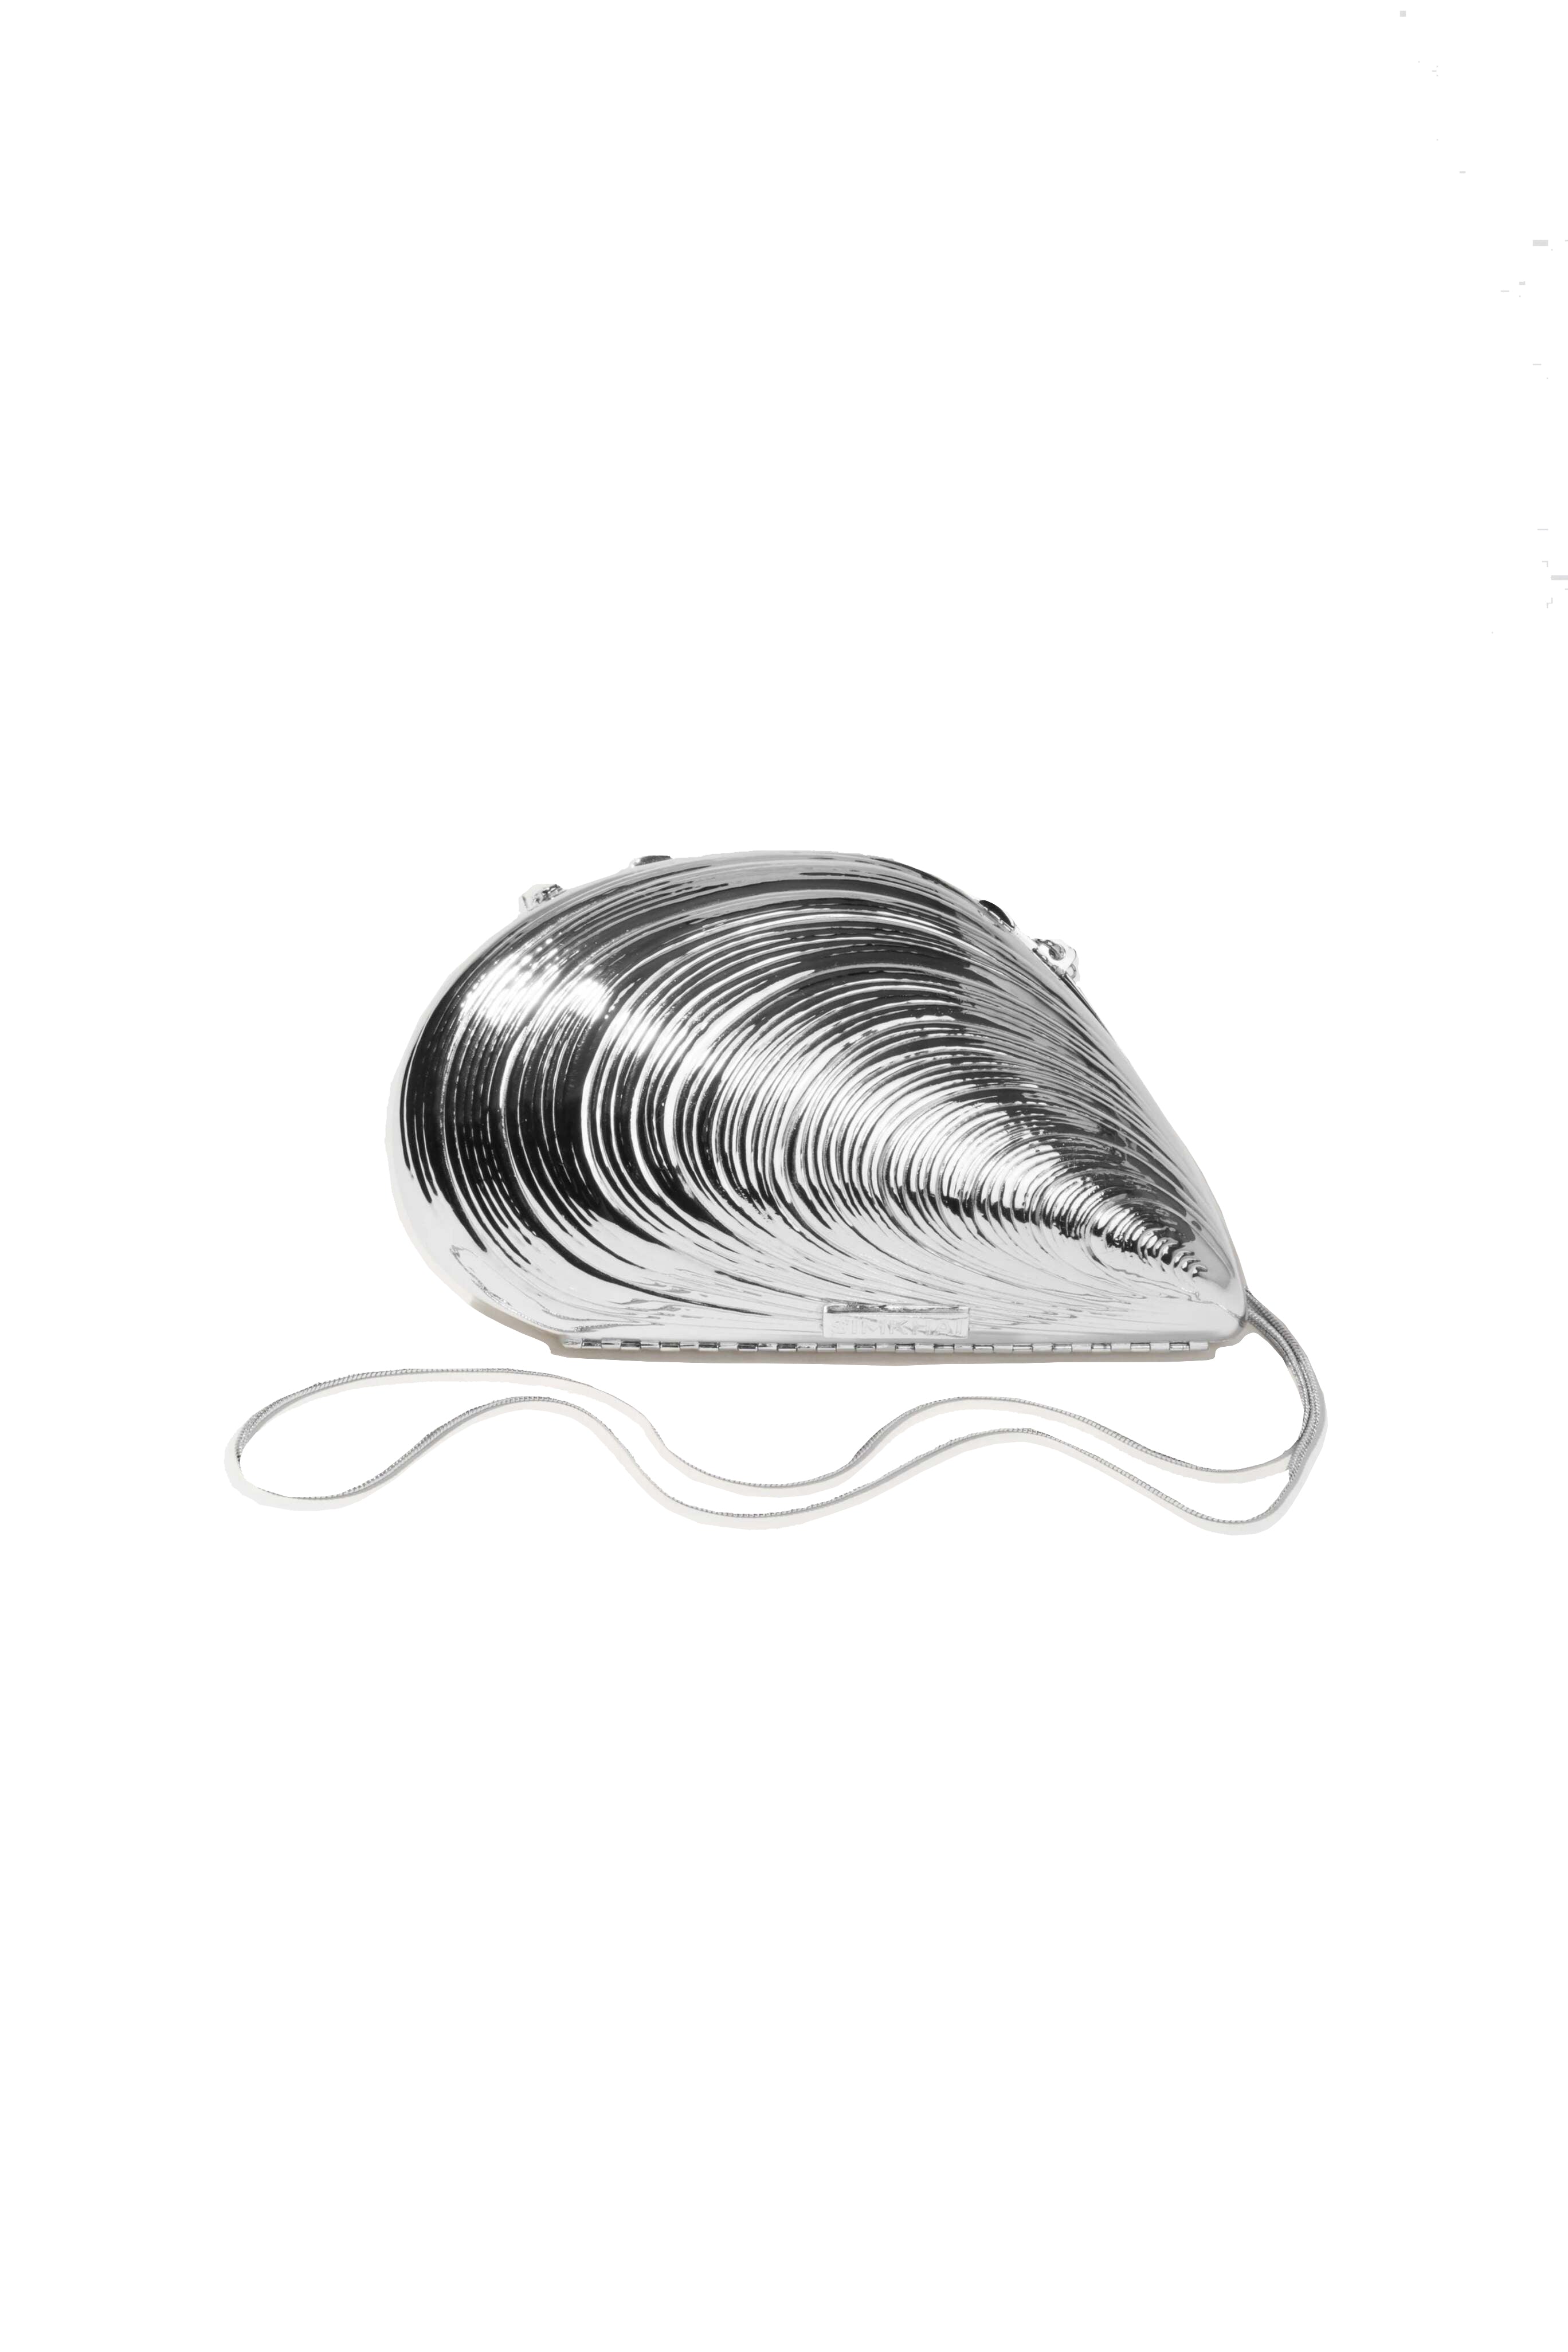 SIMKHAI Bridget Metal Oyster Shell Clutch in Silver